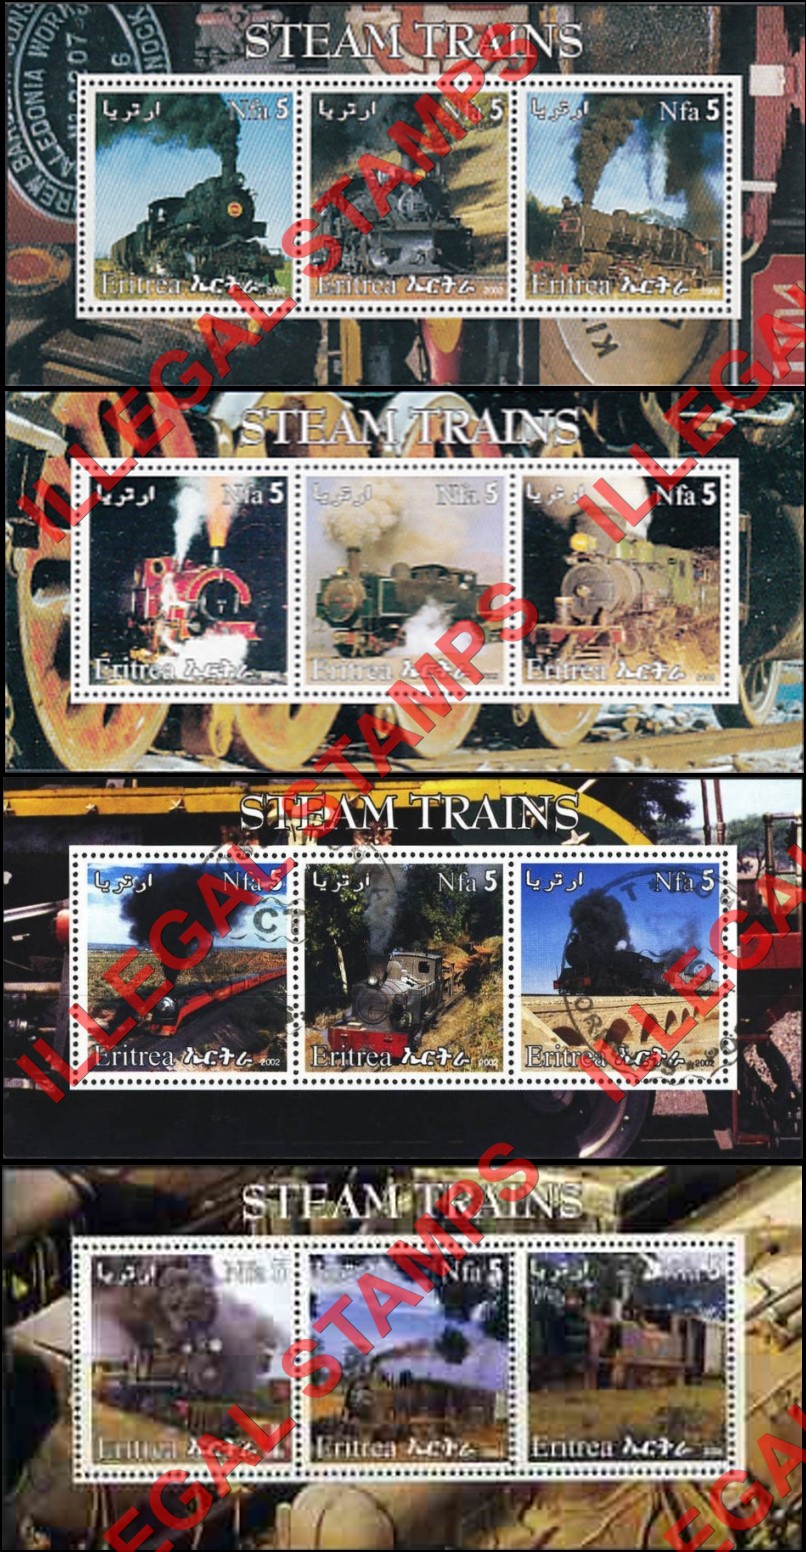 Eritrea 2002 Steam Trains Counterfeit Illegal Stamp Souvenir Sheets of 3